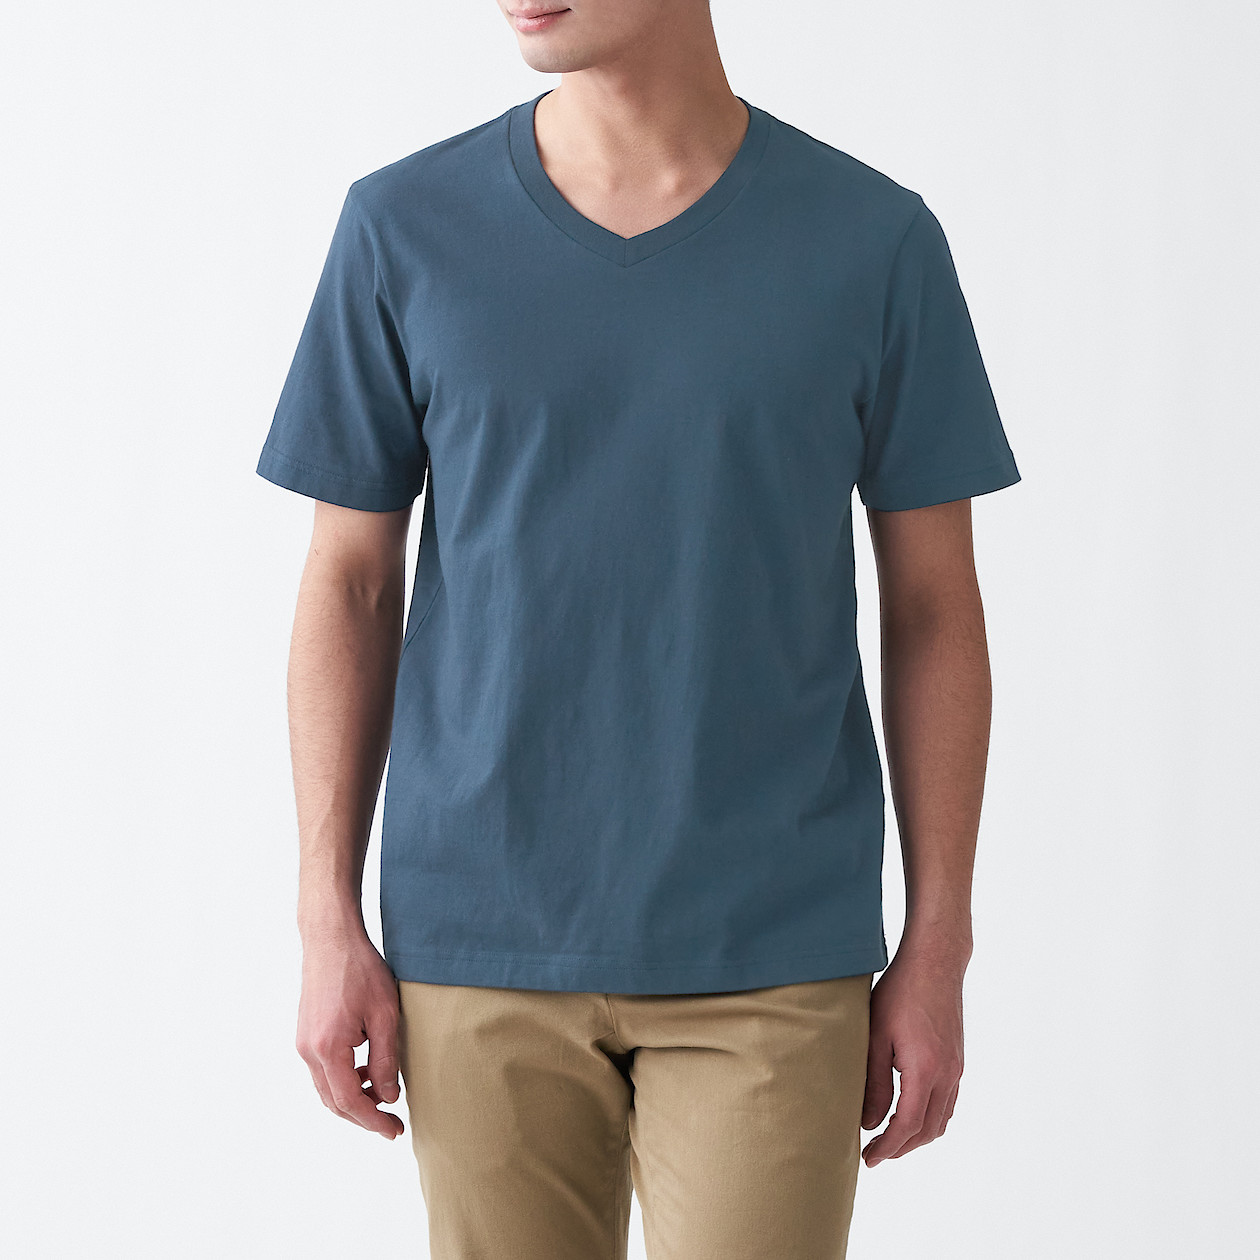 Men's Indian Cotton V-Neck T-Shirt